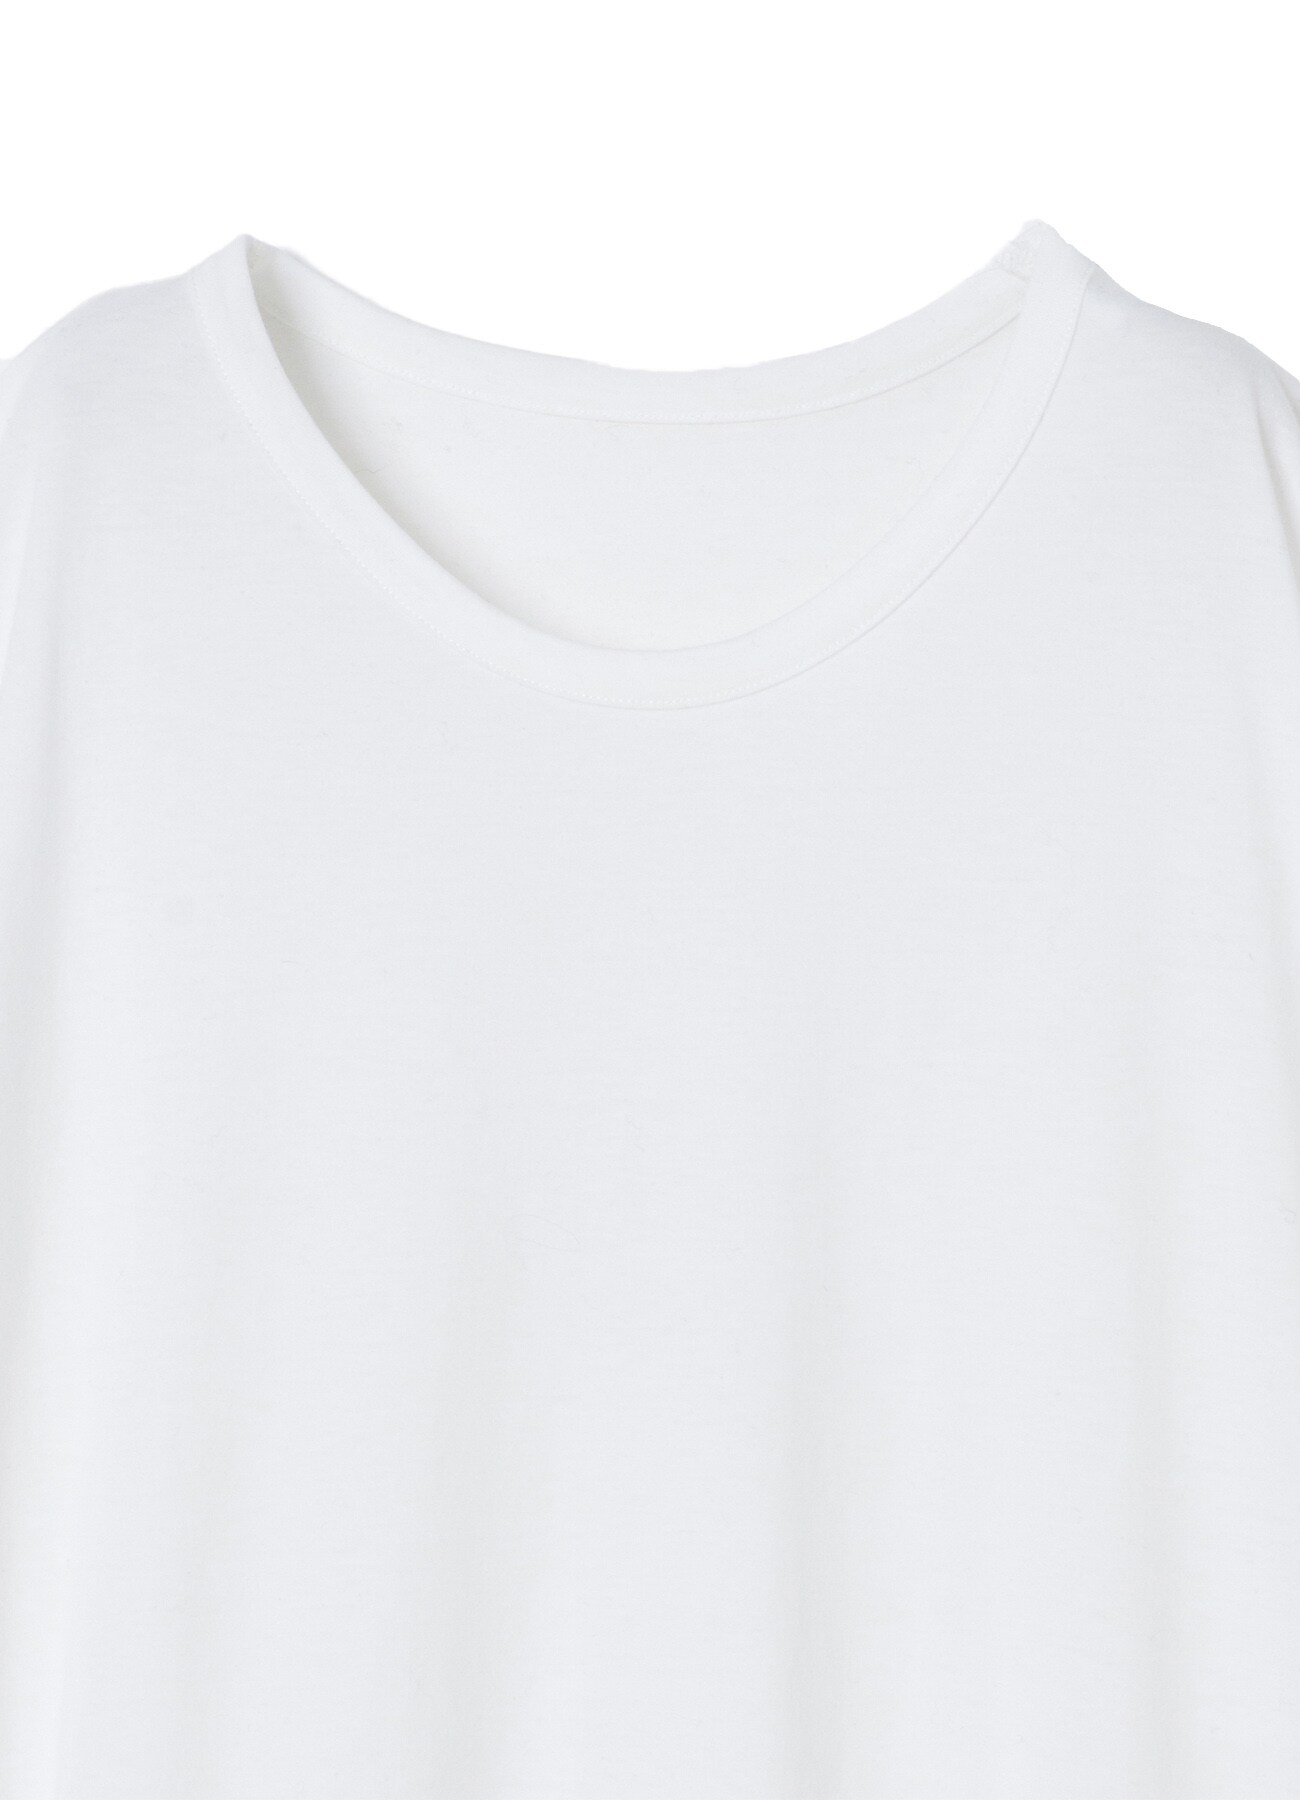 30/cotton jersey Side zipper short sleeves T